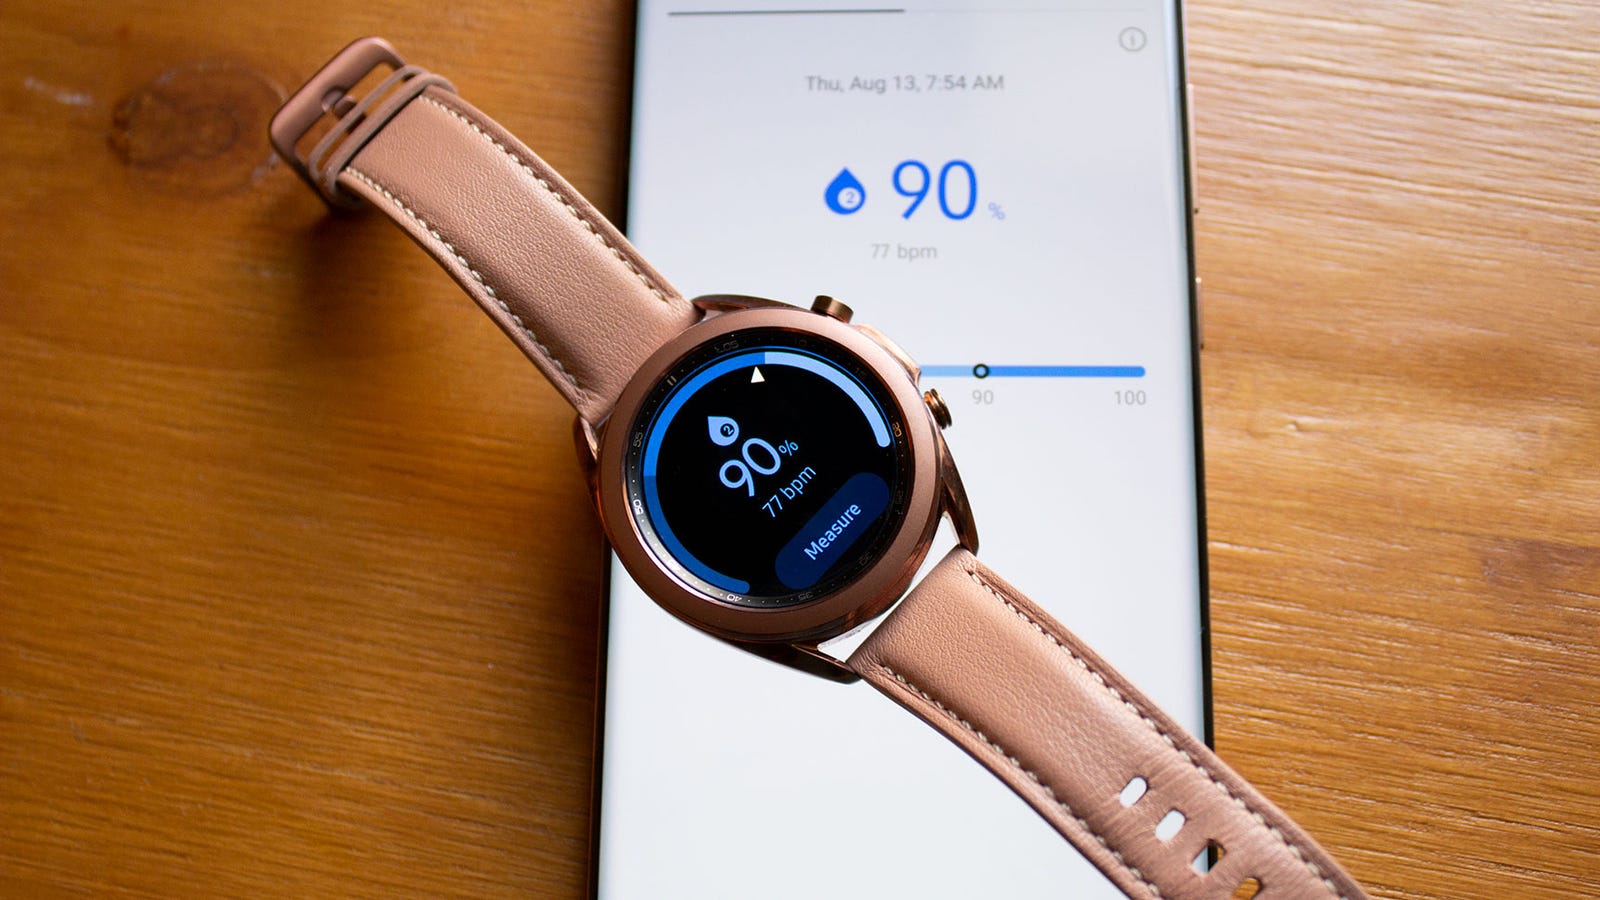 Samsung Galaxy Watch 3 ساعت هوشمندی که منتظر آن بودیم